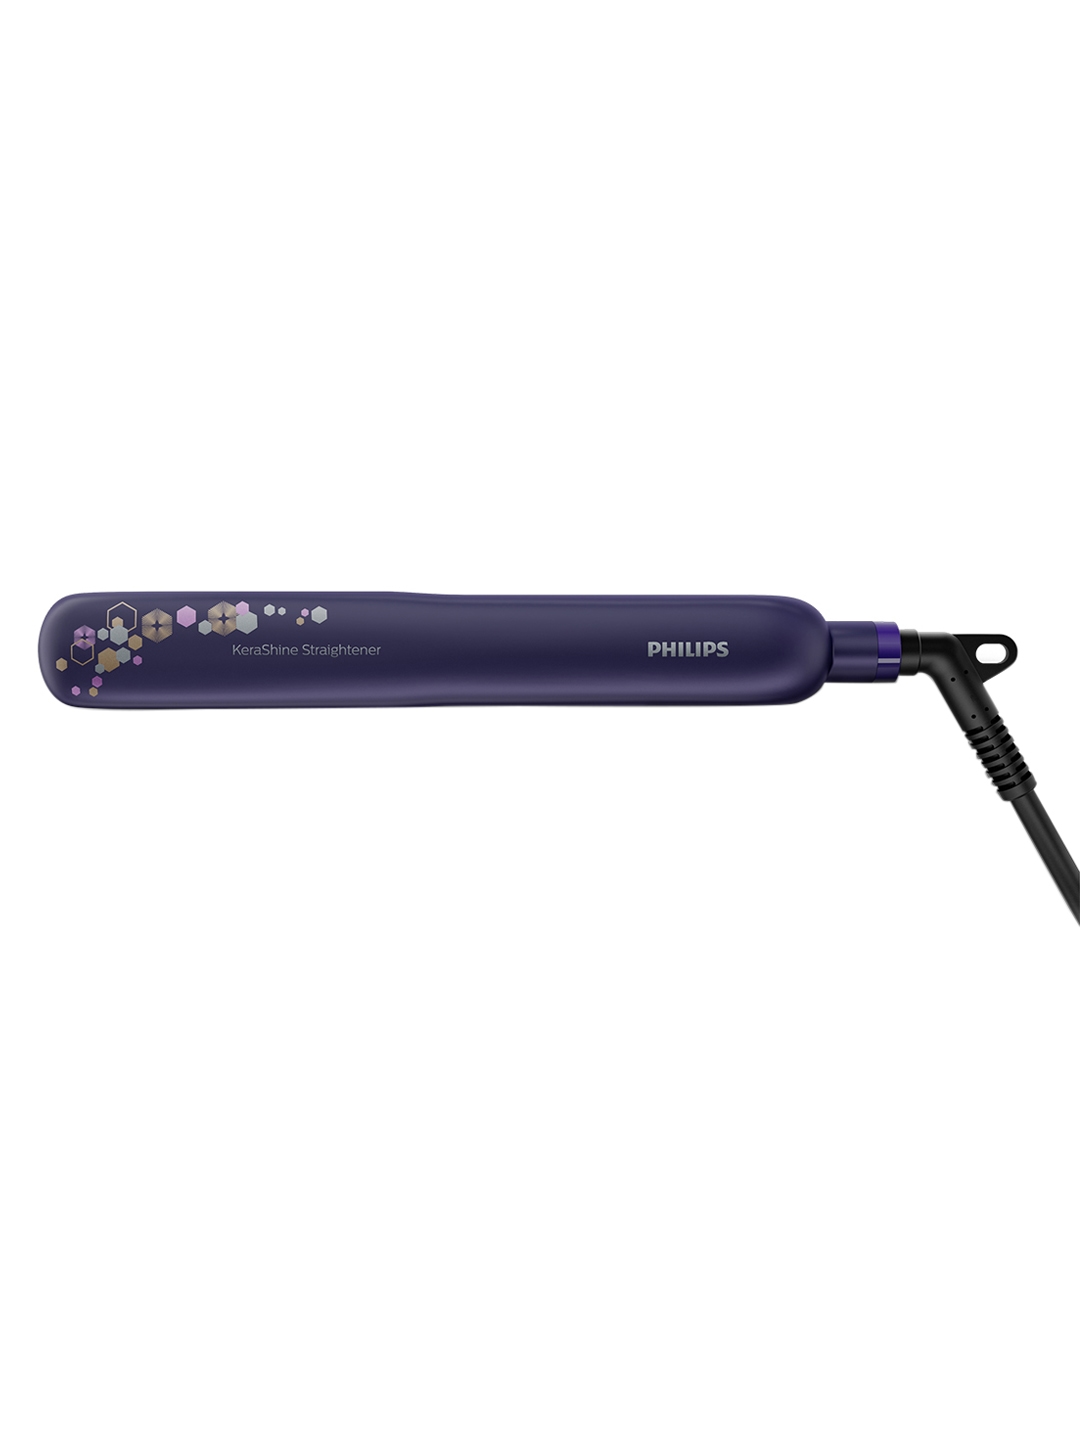 Buy Philips KeraShine Hair Straightener With Silkpro Care Technology  BHS386/00 - Hair Appliance for Women 2974139 | Myntra